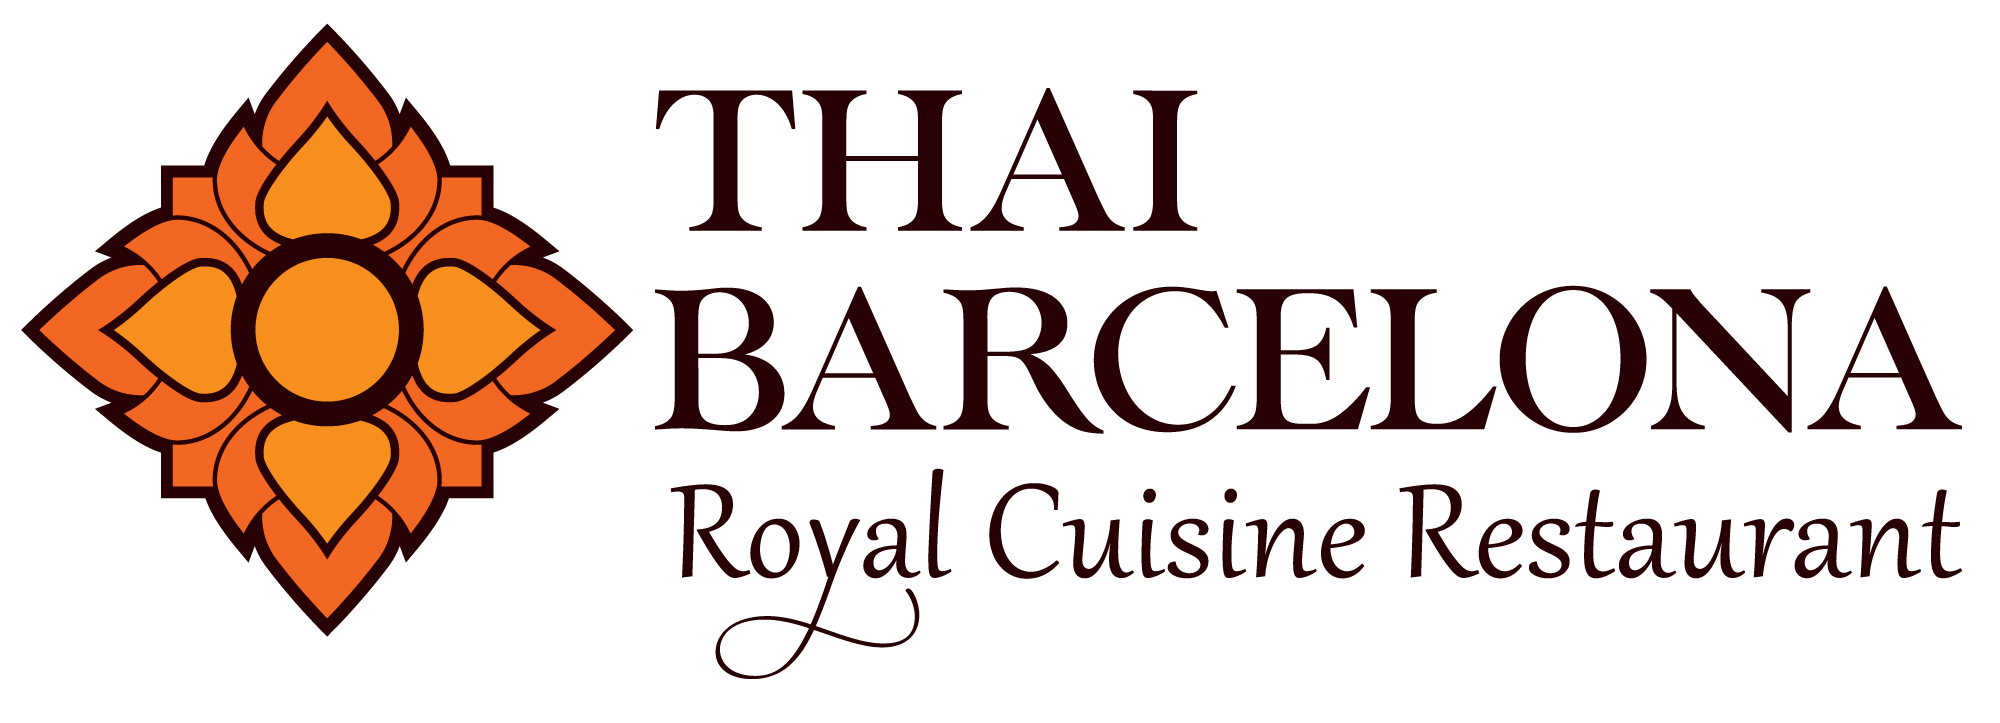 Logo Thai Barcelona big.[1]